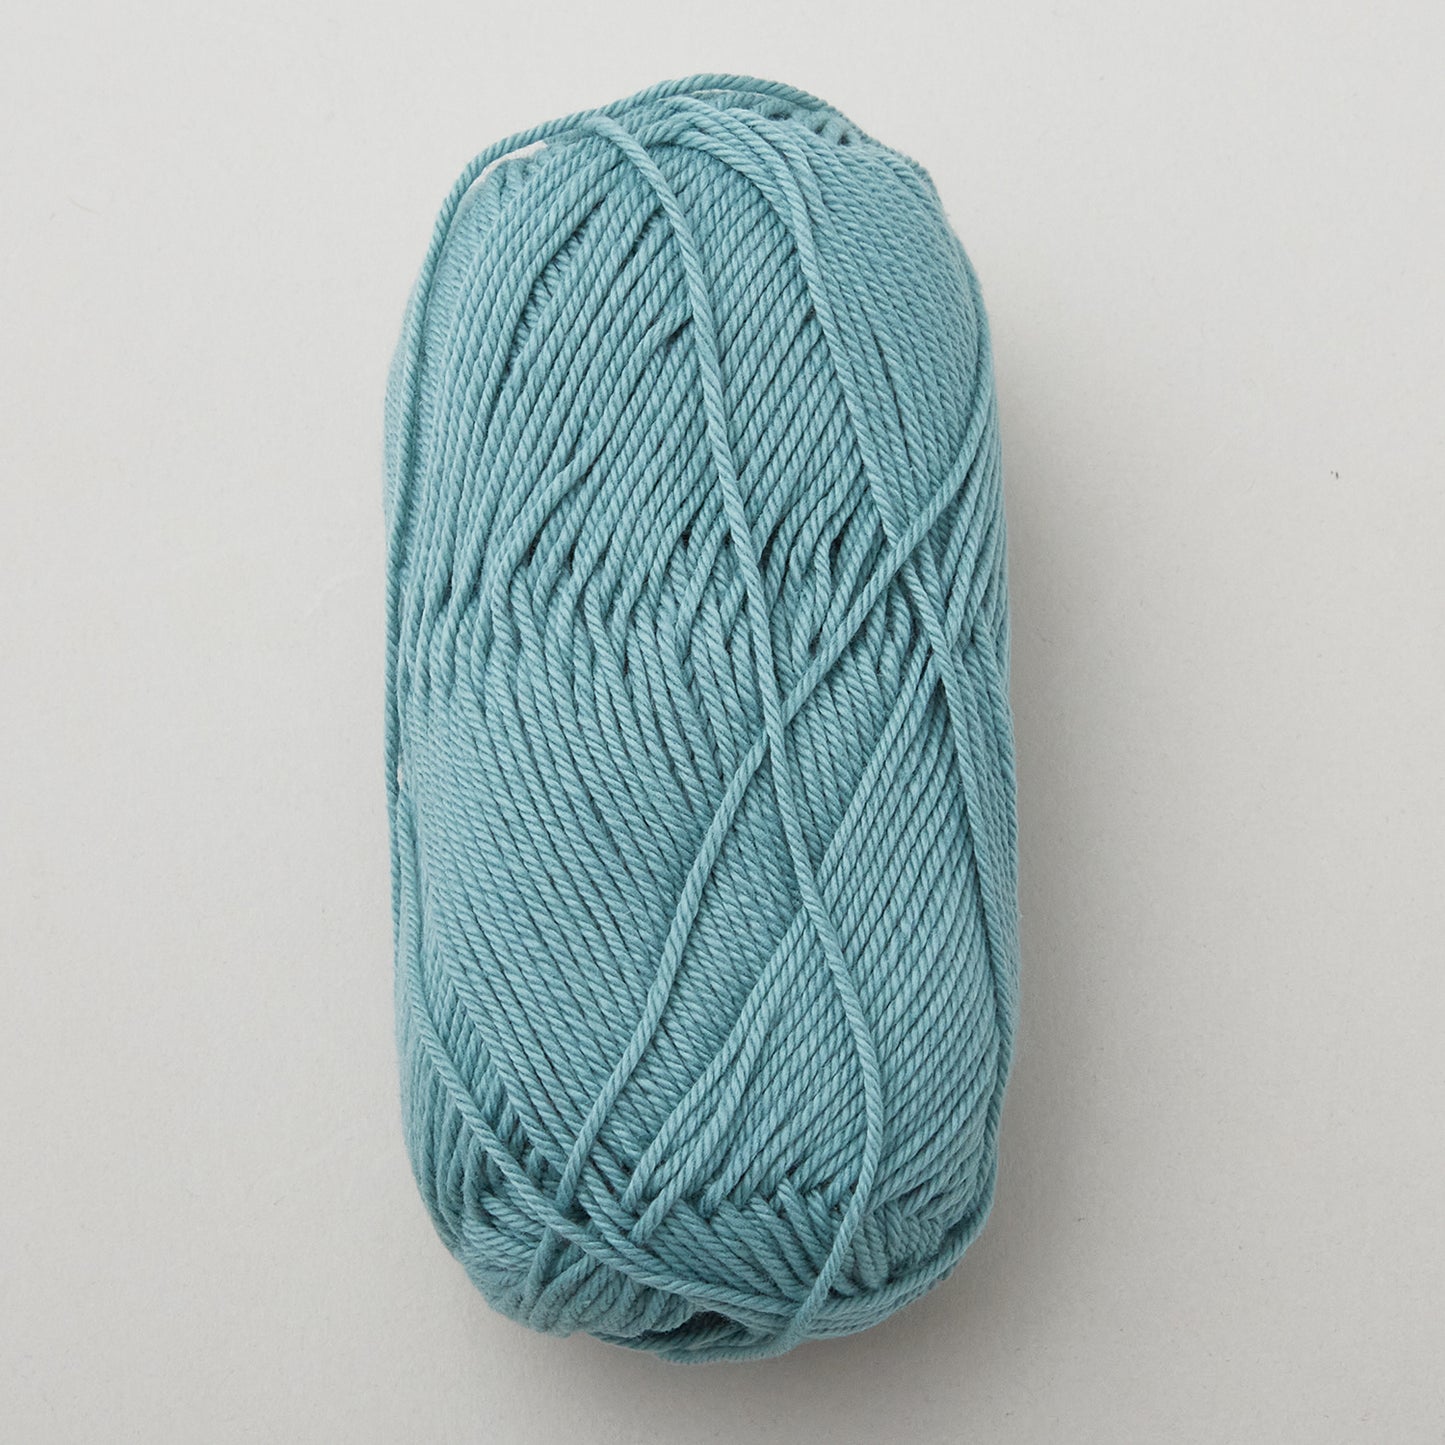 Lori Holt Chunky Crochet Thread Raindrop (32993) Alternative View #1